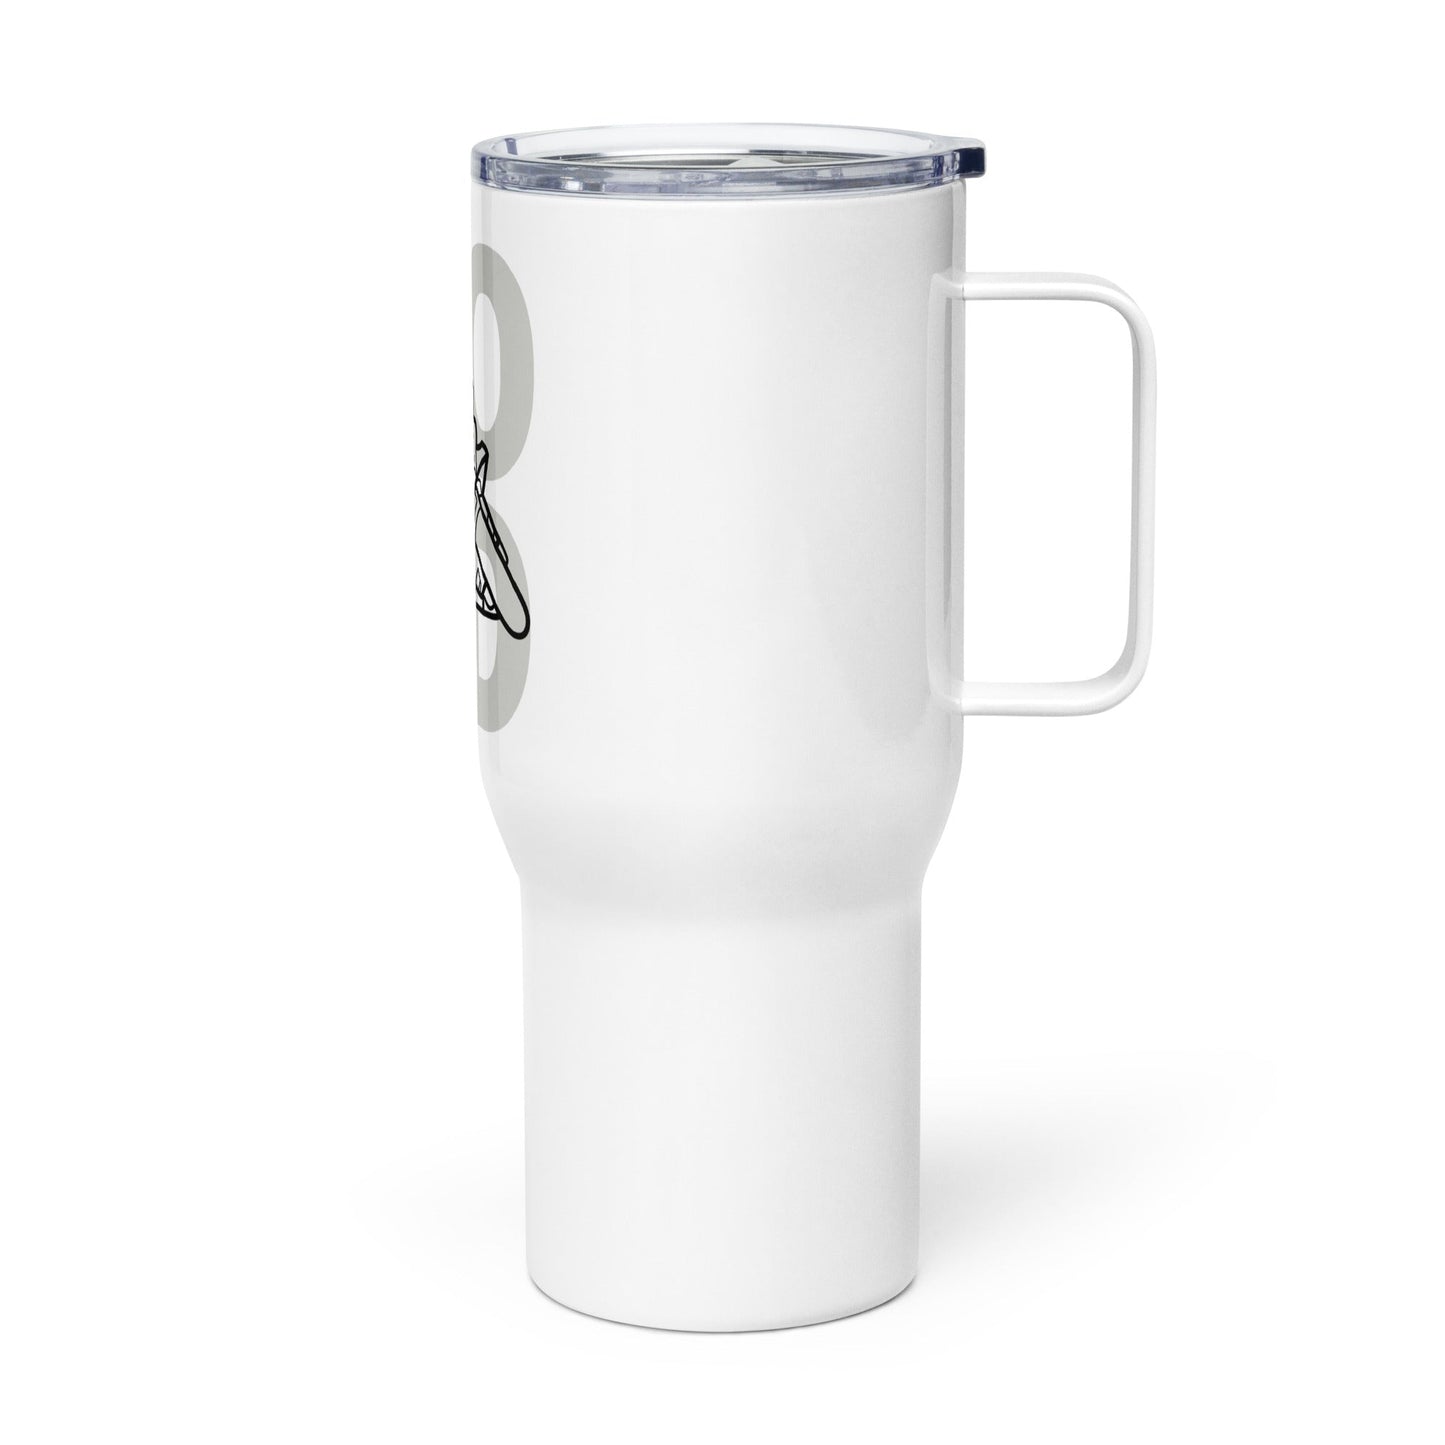 Travel mug with a handle - Mood - The Vandi Company